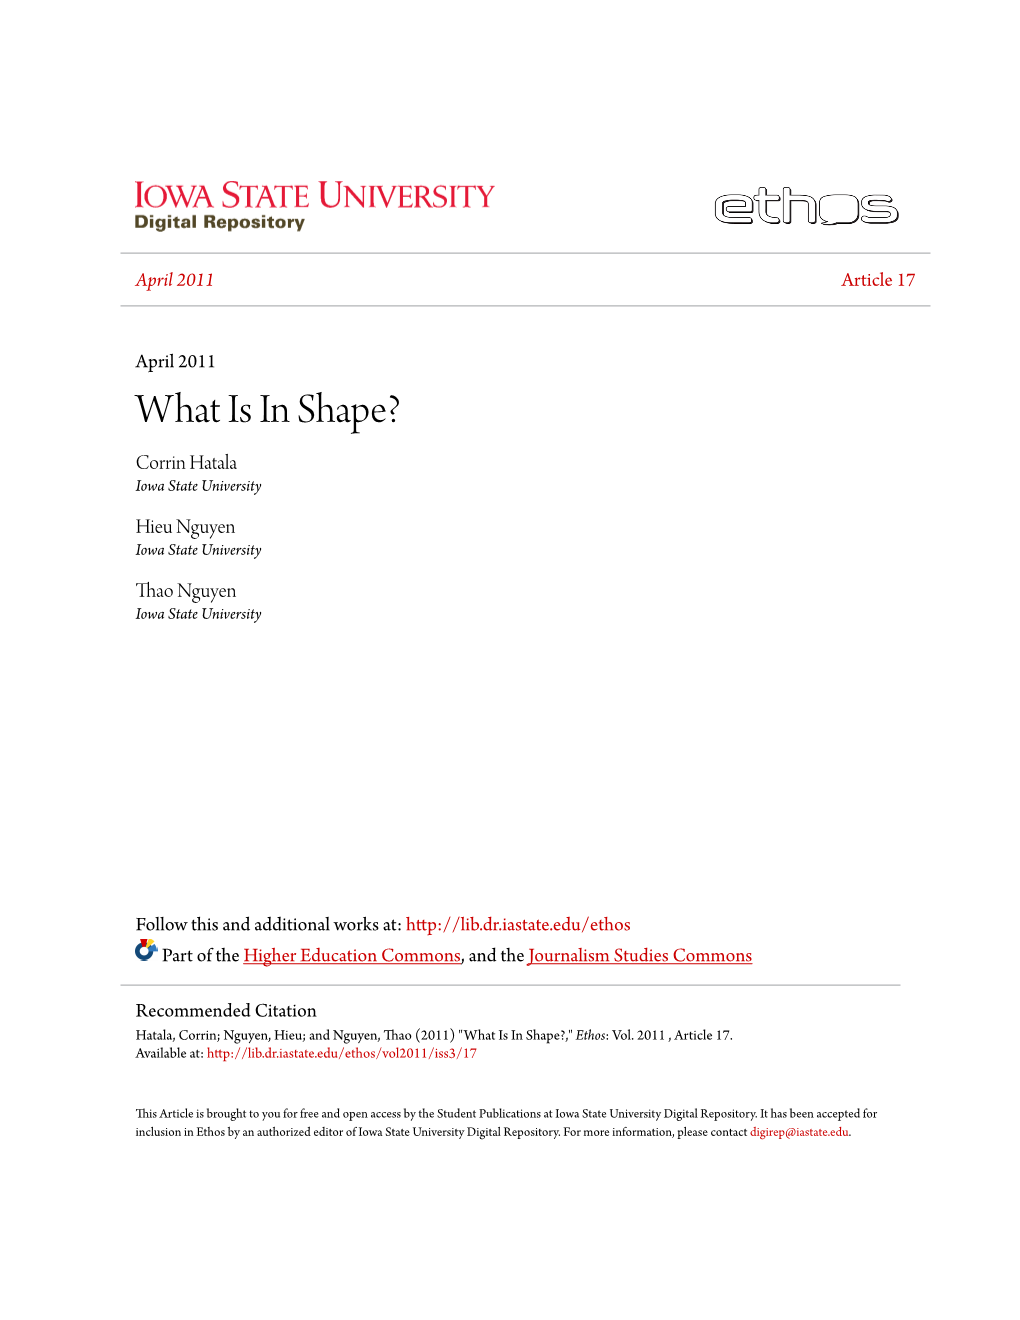 What Is in Shape? Corrin Hatala Iowa State University